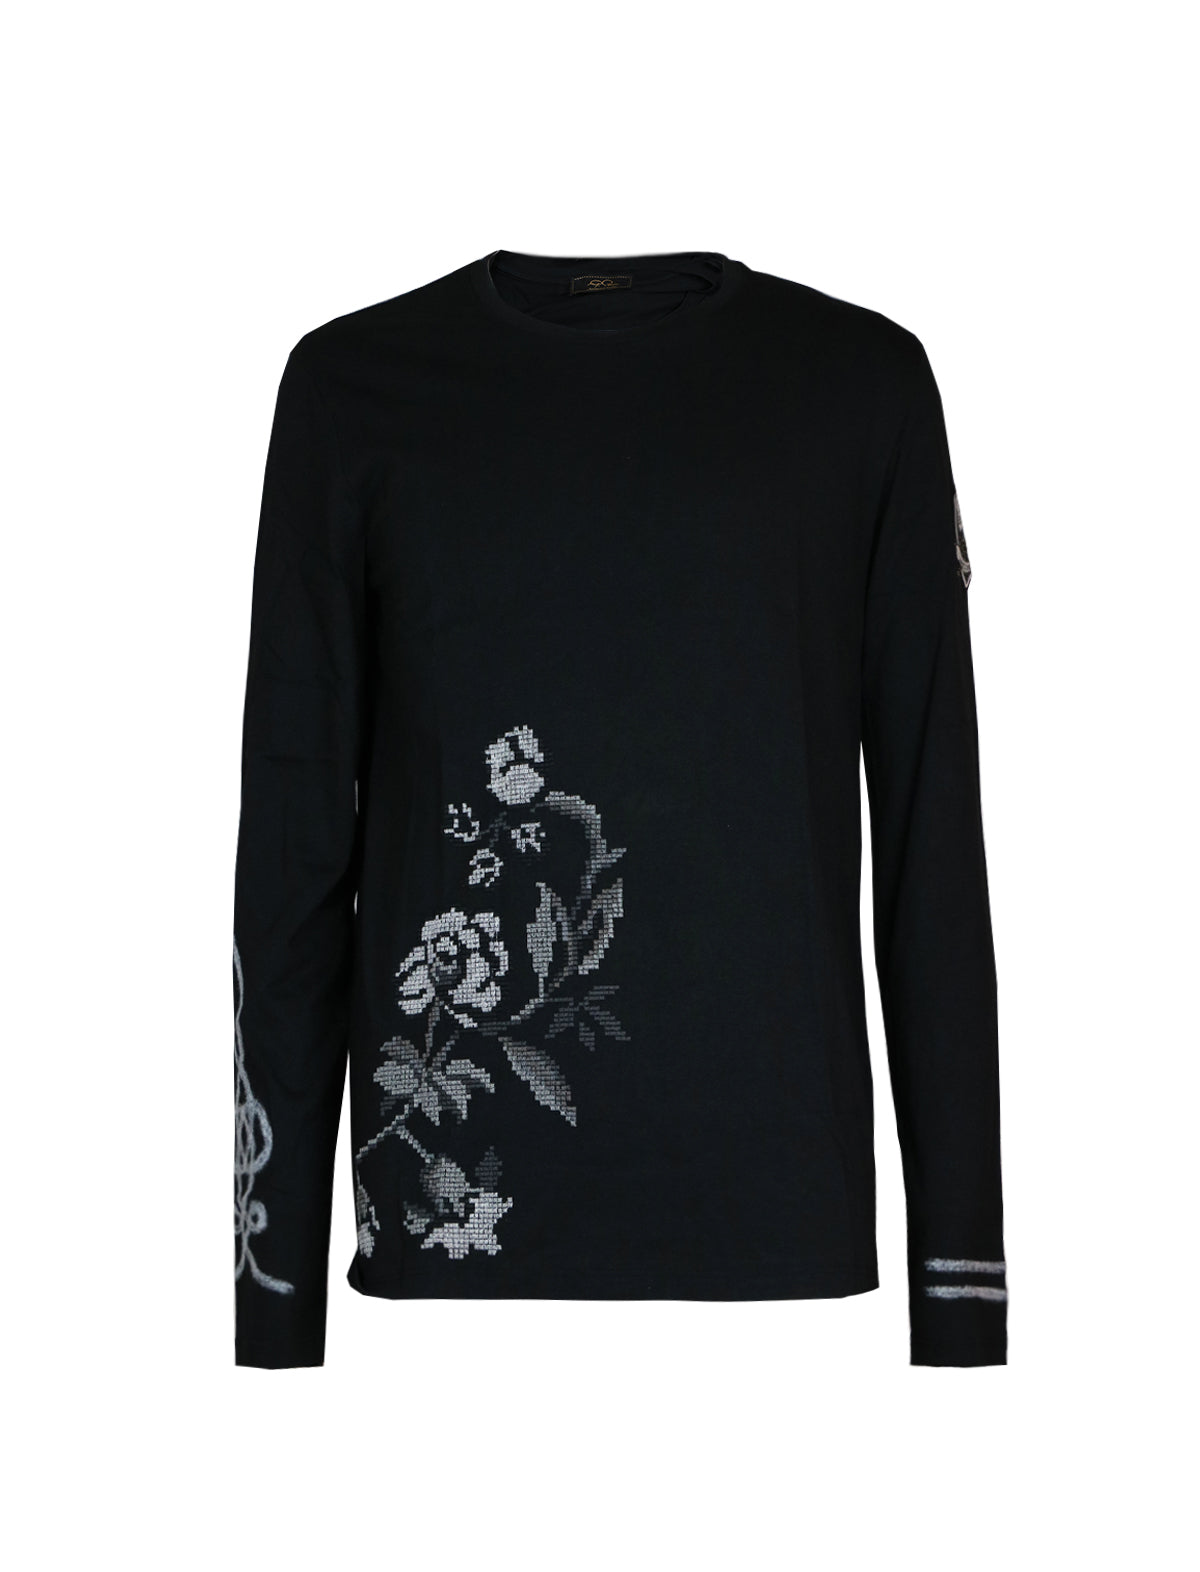 Gabriele Pasini Long-Sleeved Sweatshirt with Floral Print in Black